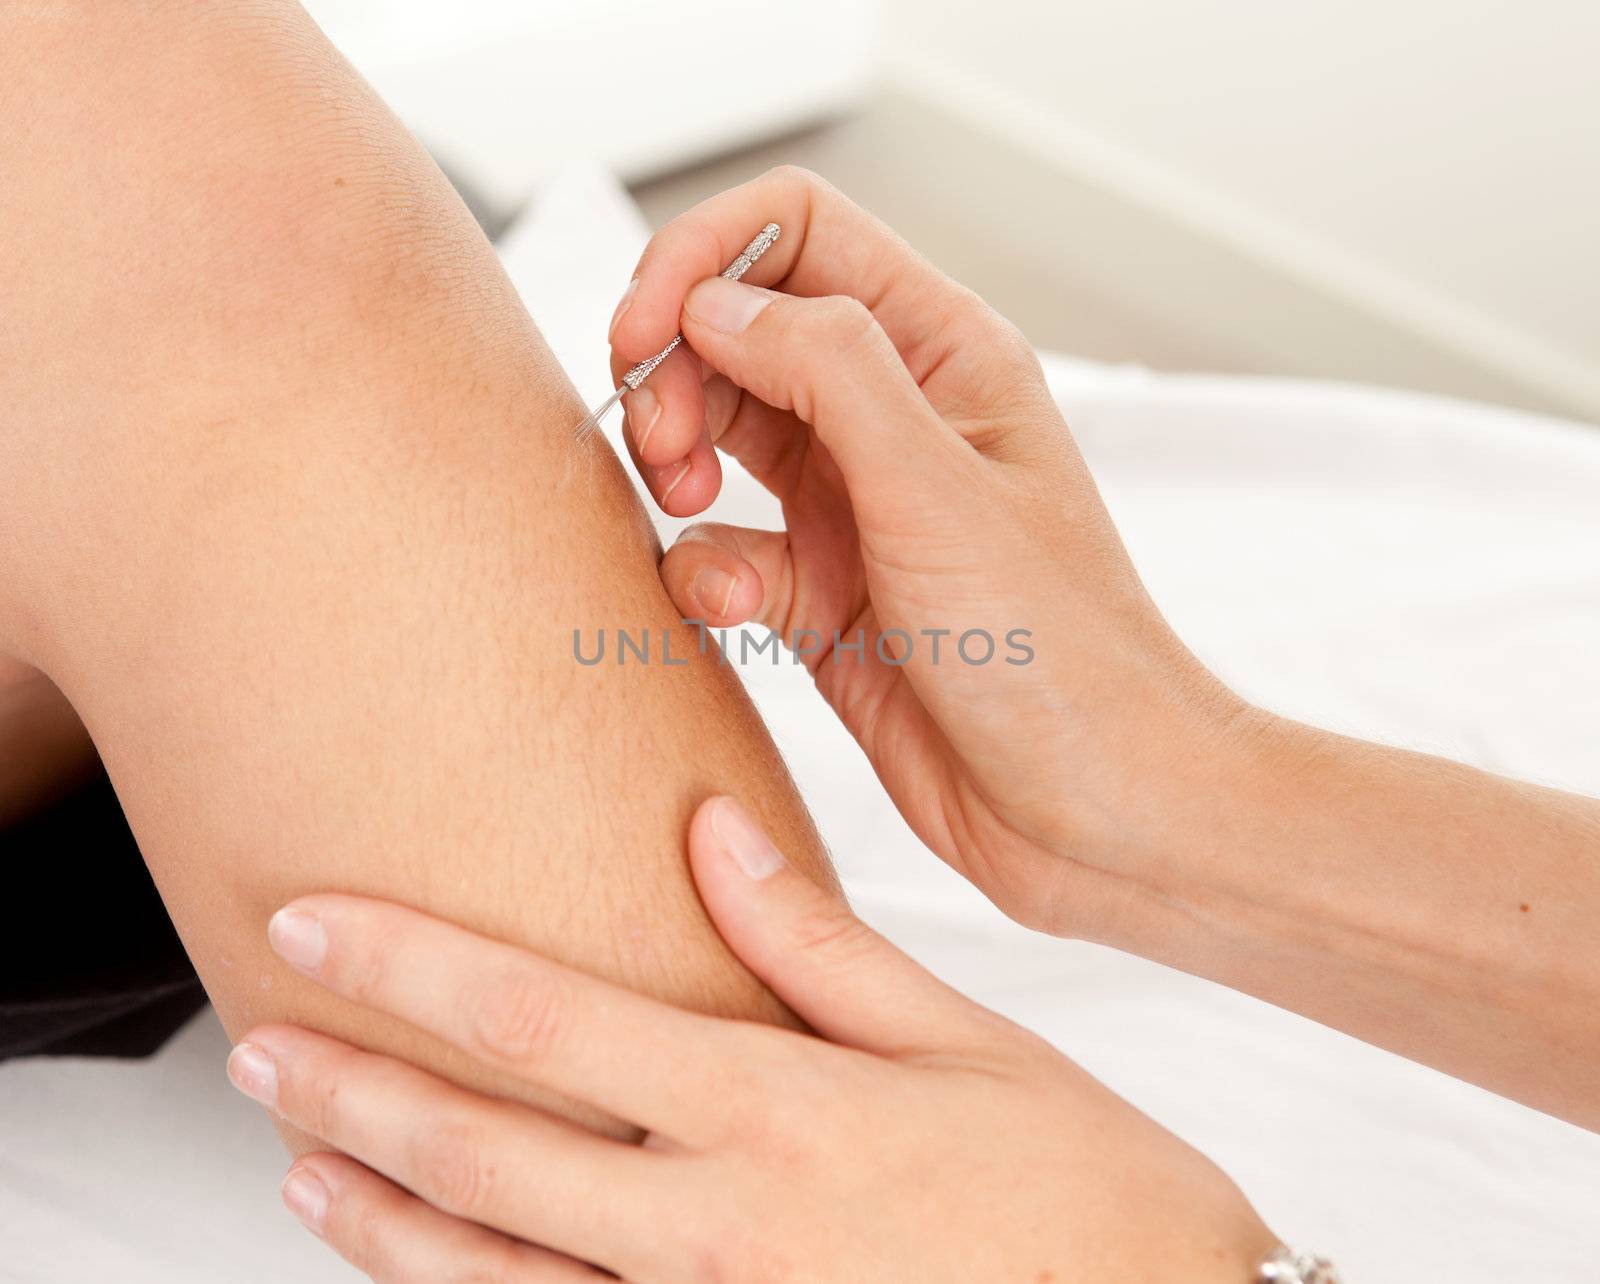 Shonishin pediatric acupuncture on a young boy's leg